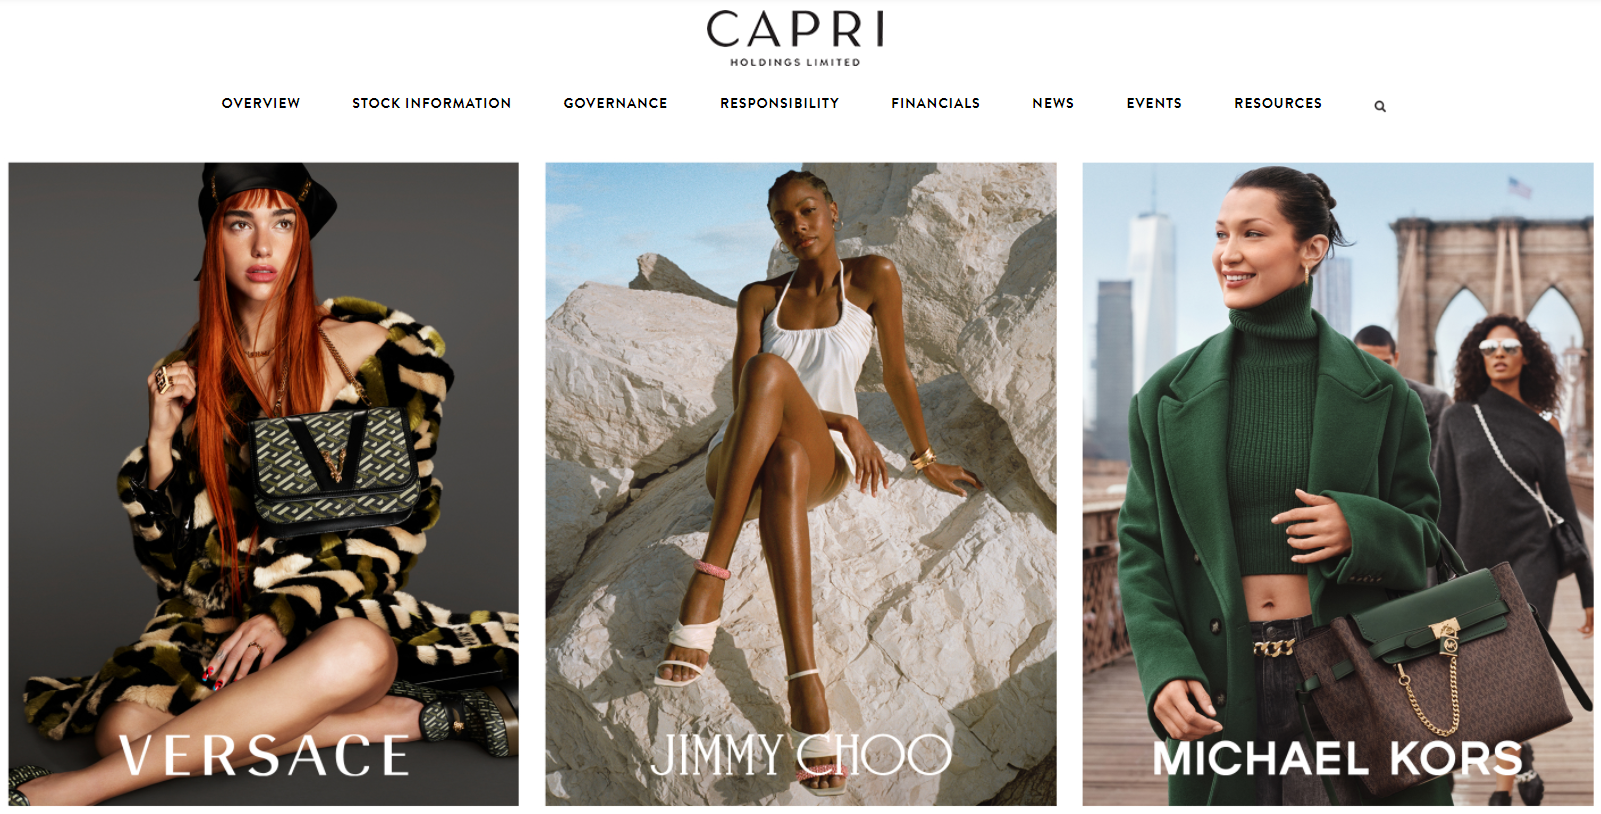 Capri集团上季度销售大涨178%，Versace有望首次突破年销售额10亿美元大关